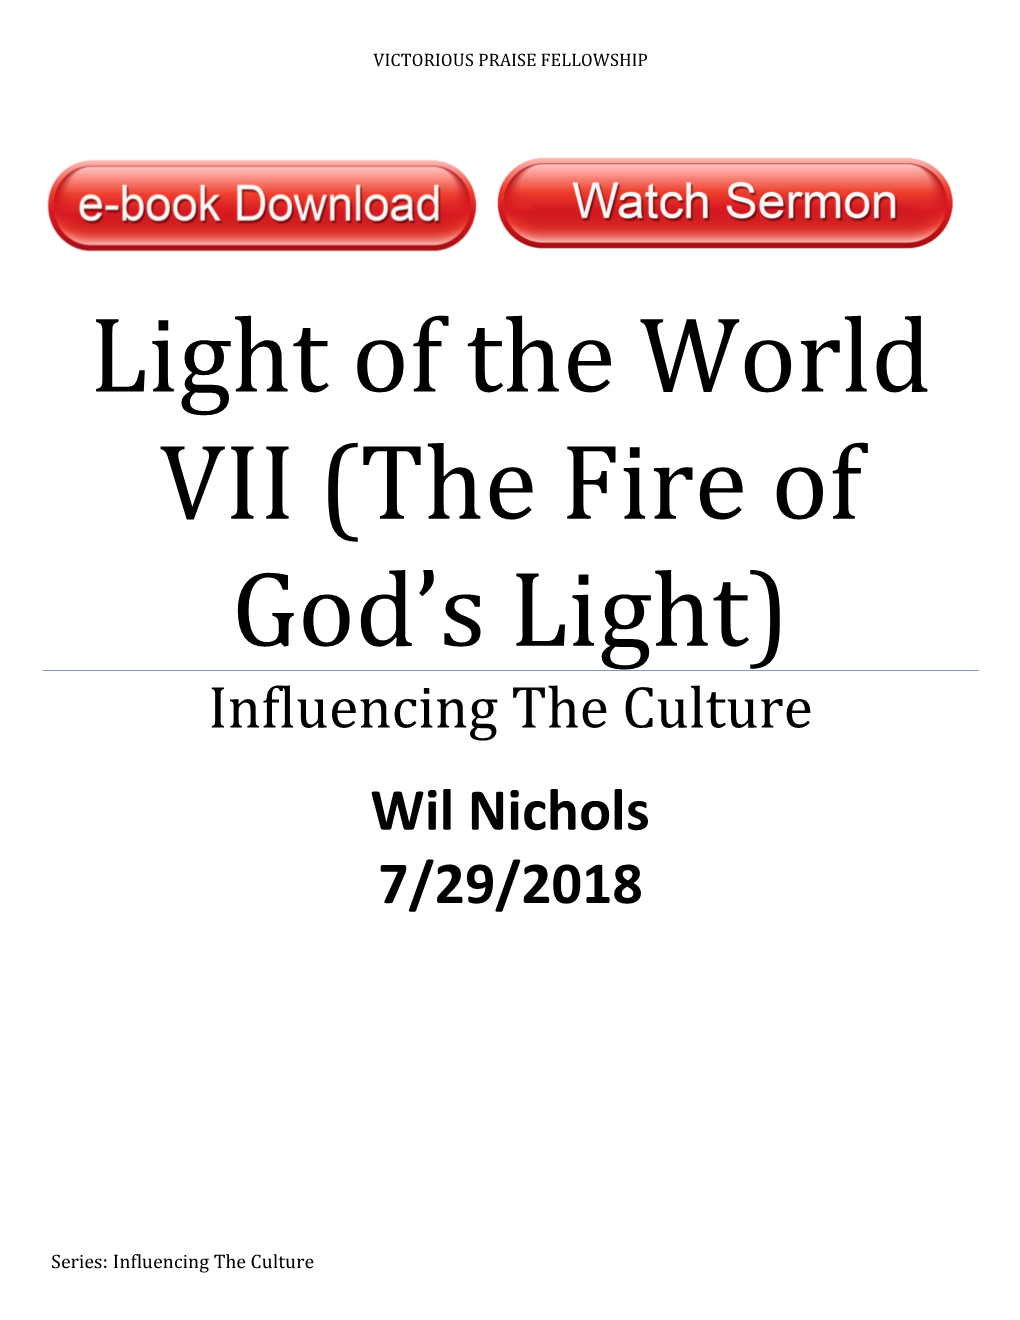 The Fire of God's Light